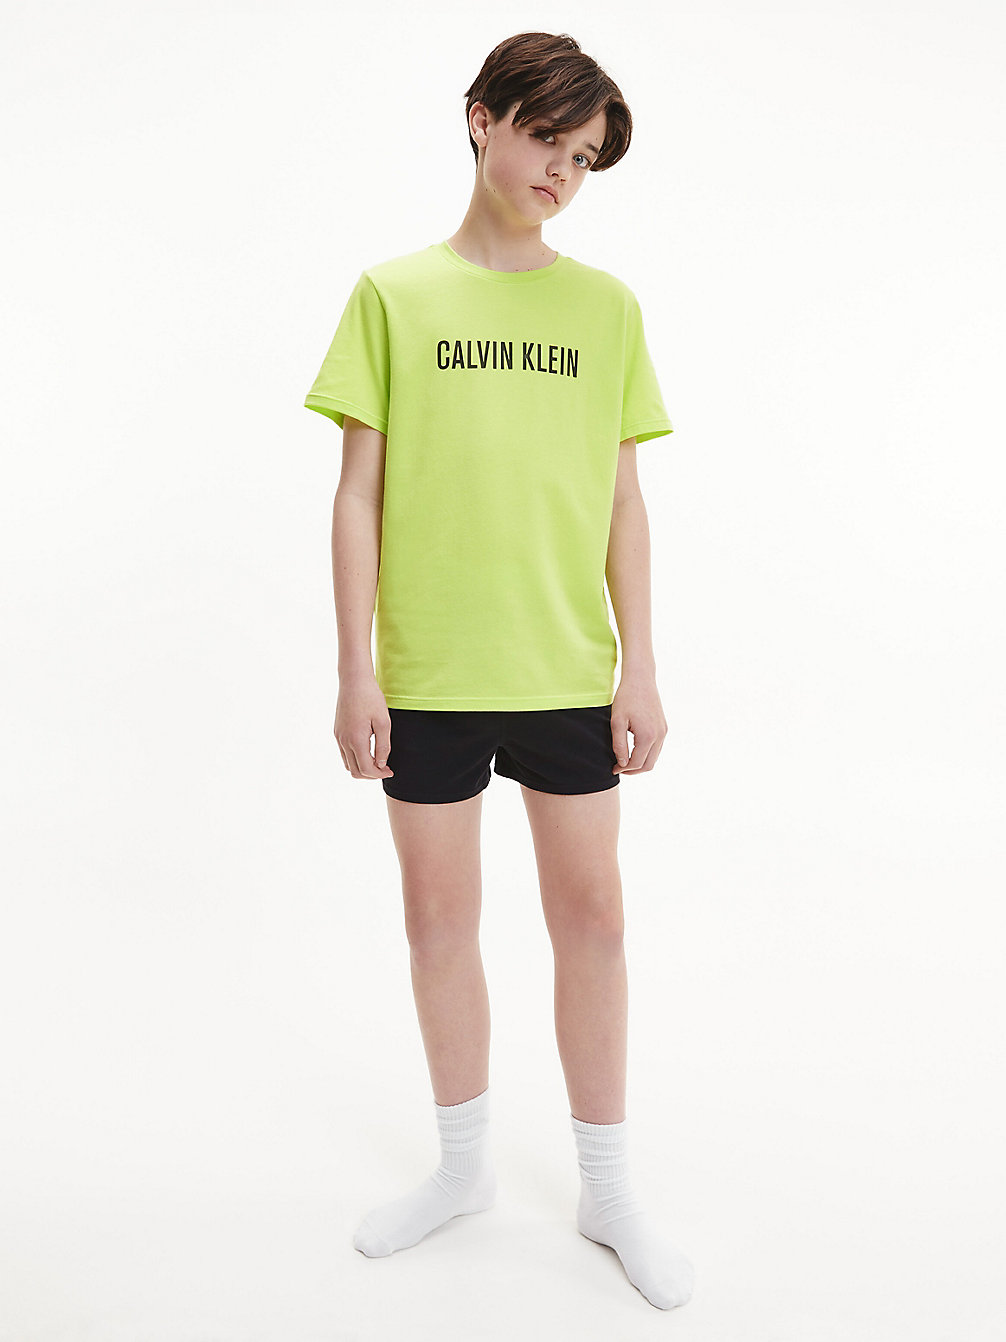 SOURLIME/W/PVHBLACK > Shorts-Pyjama-Set – Intense Power > undefined boys - Calvin Klein